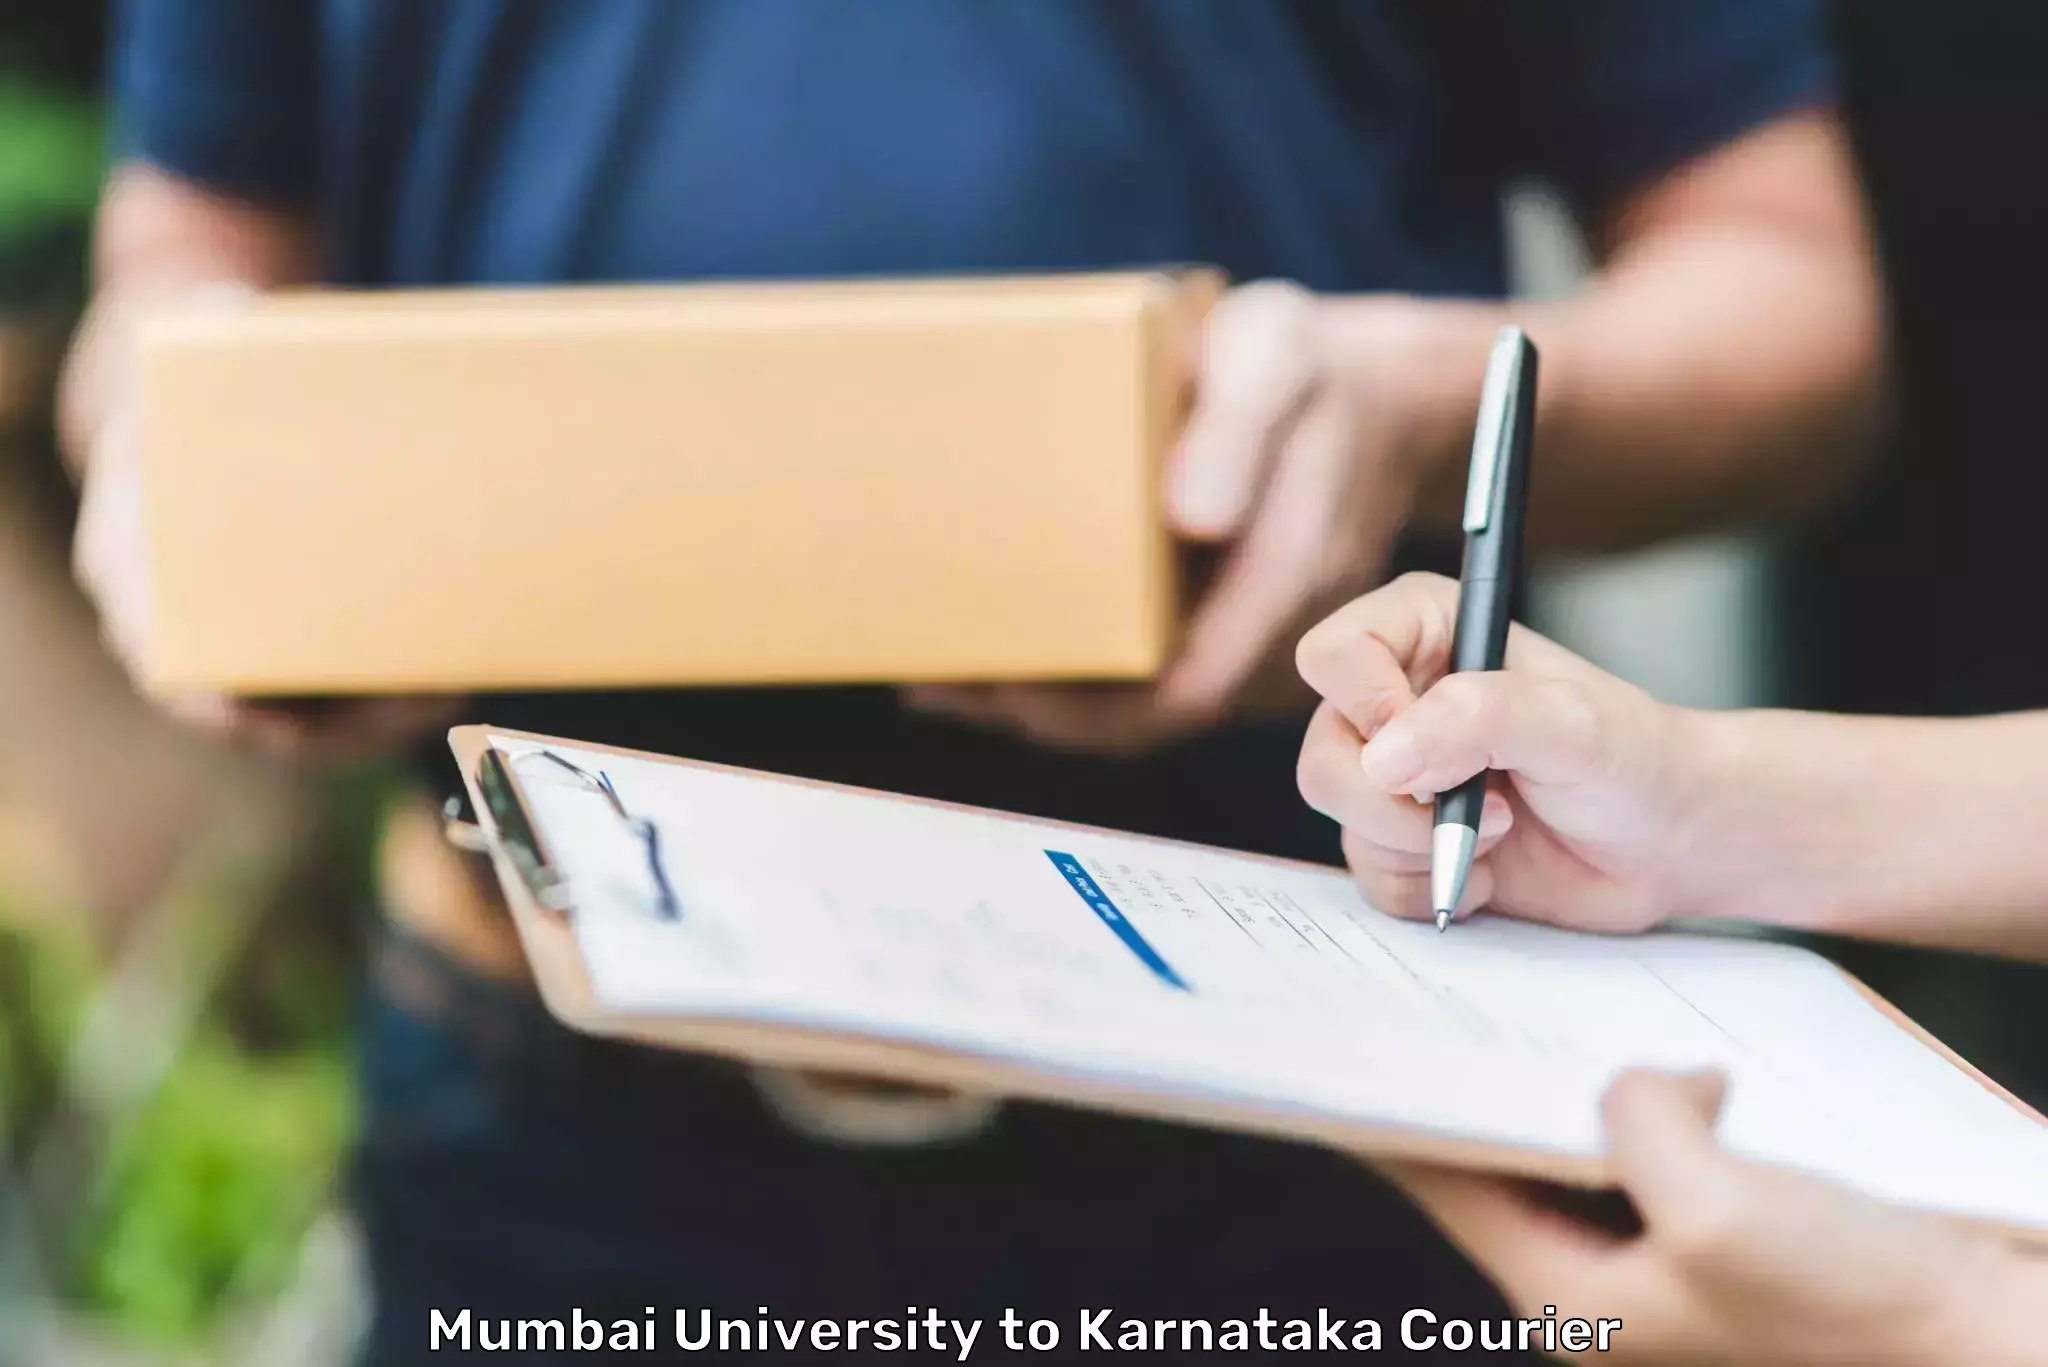 Package forwarding Mumbai University to Laxmeshwar